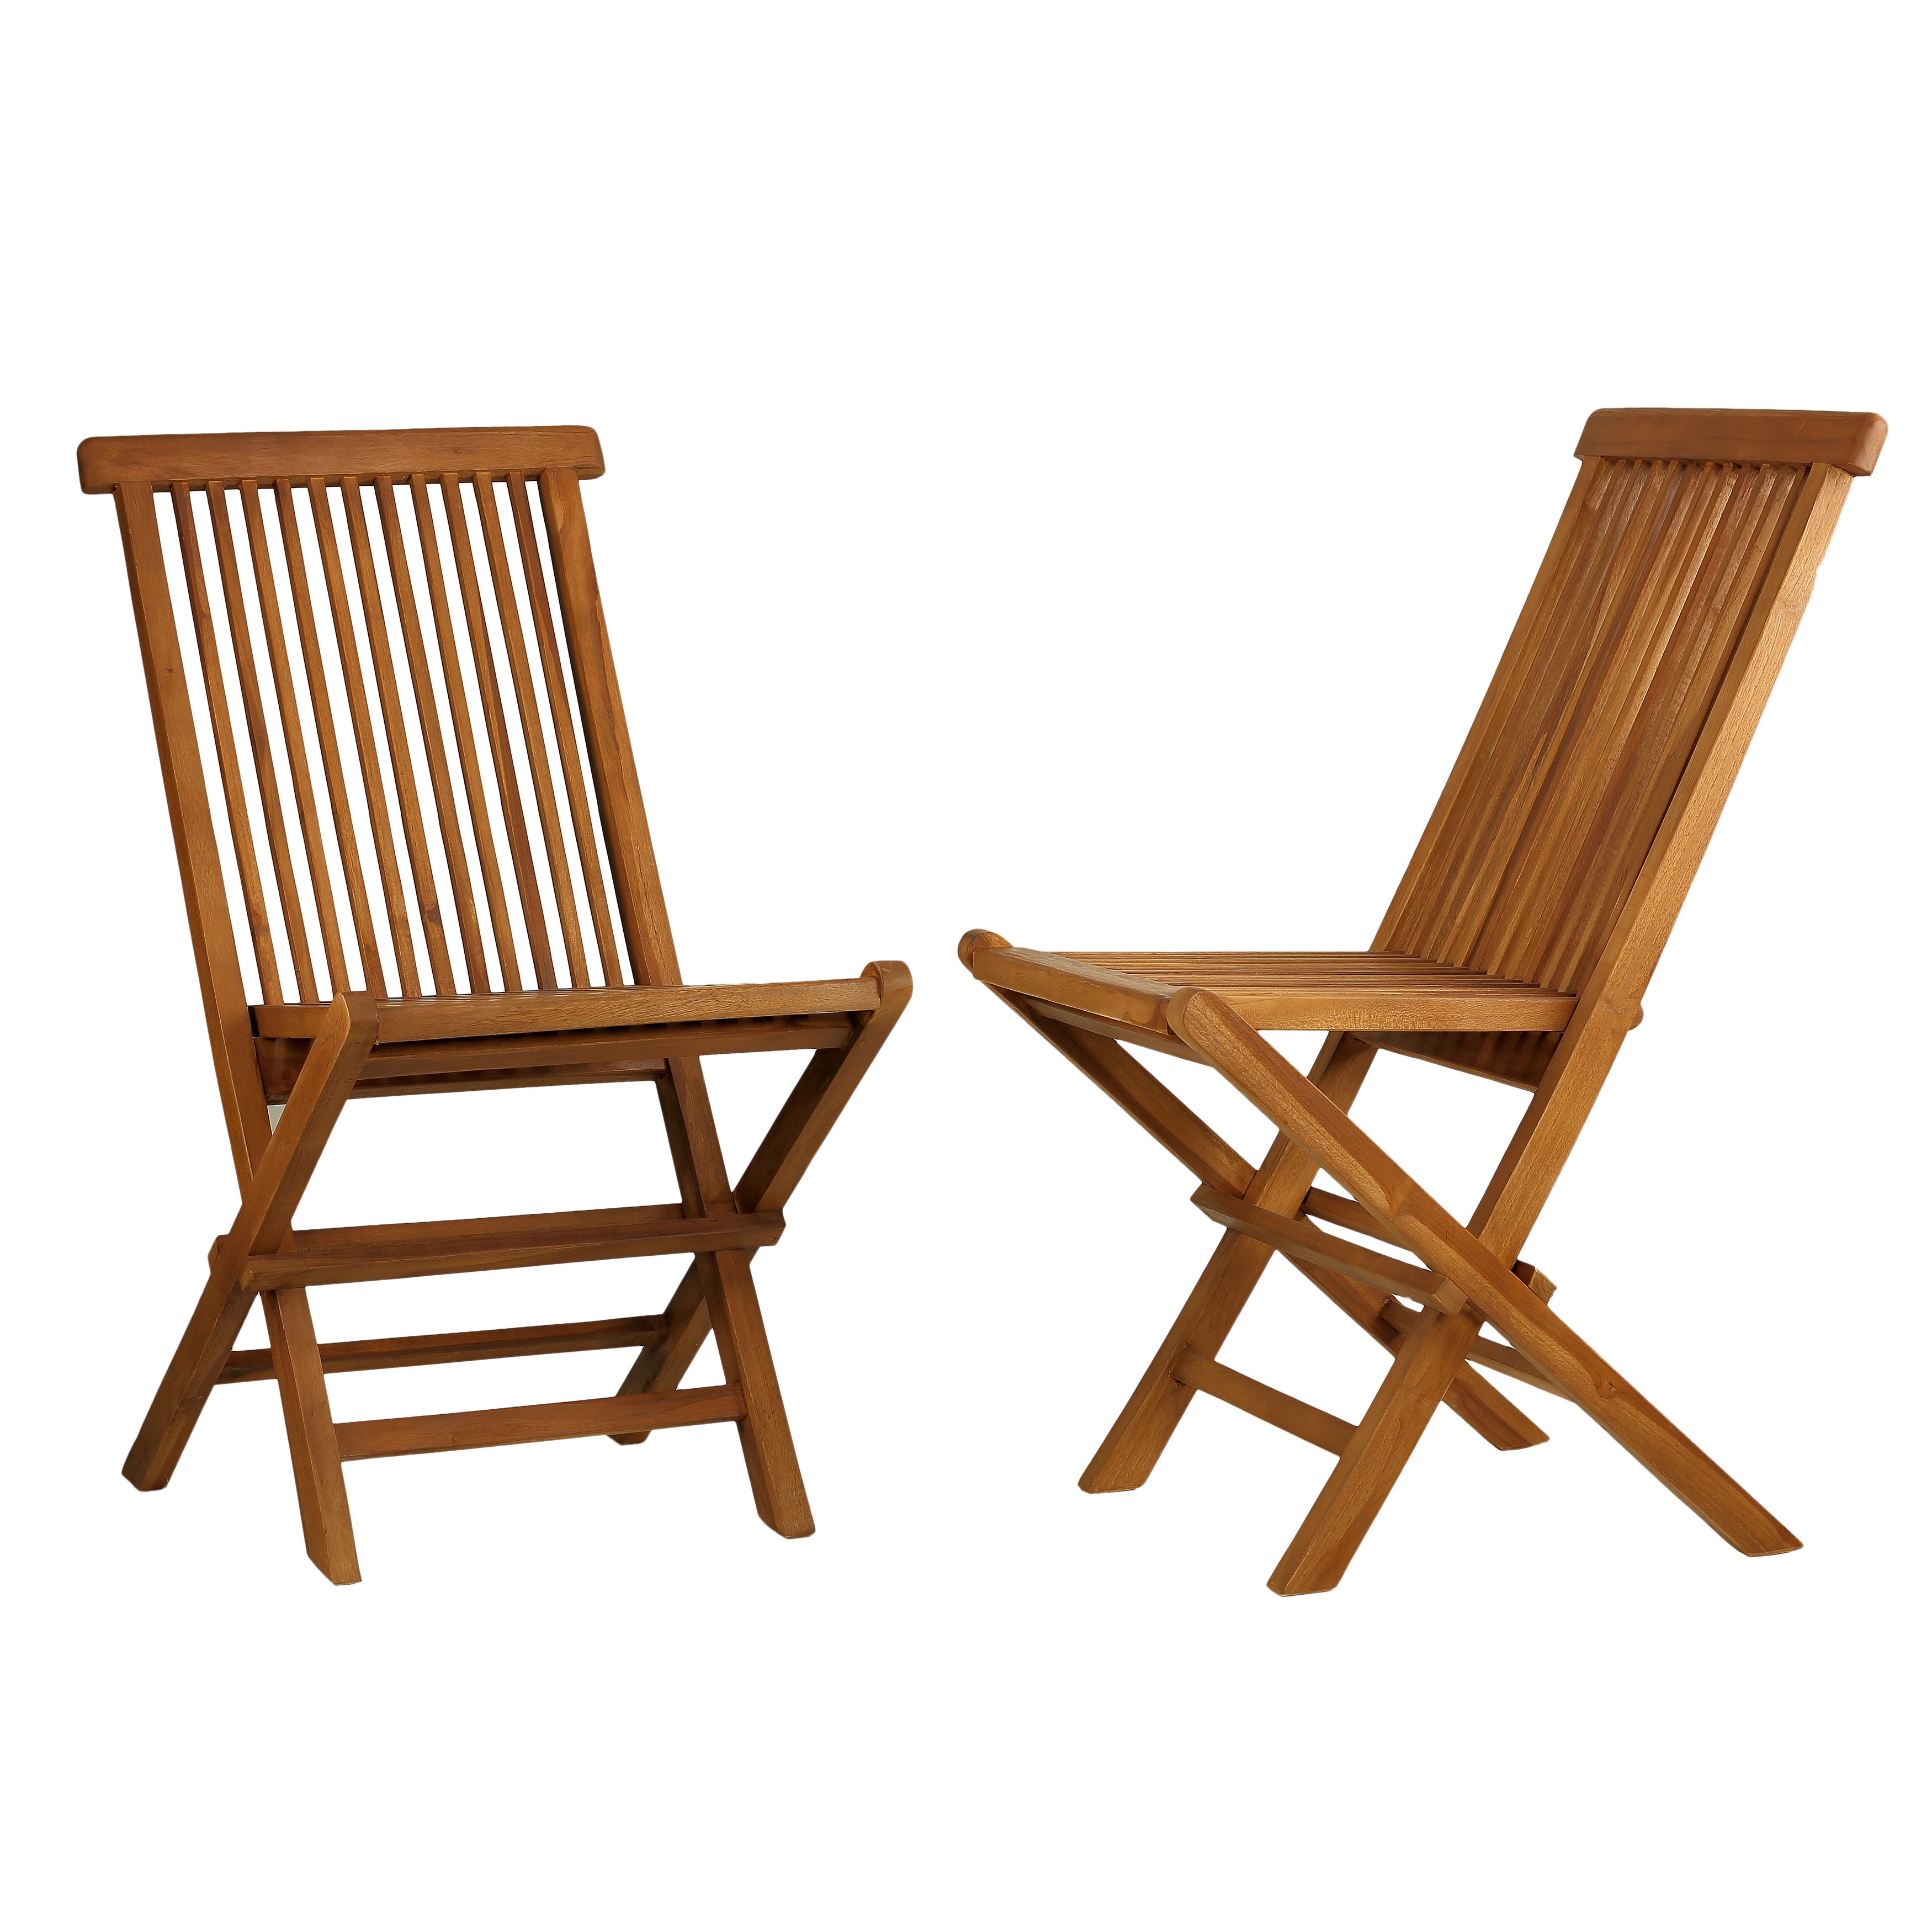 Bare Decor  Vega Golden Teak Wood Outdoor Folding Chair (Set of 2) - image 1 of 4